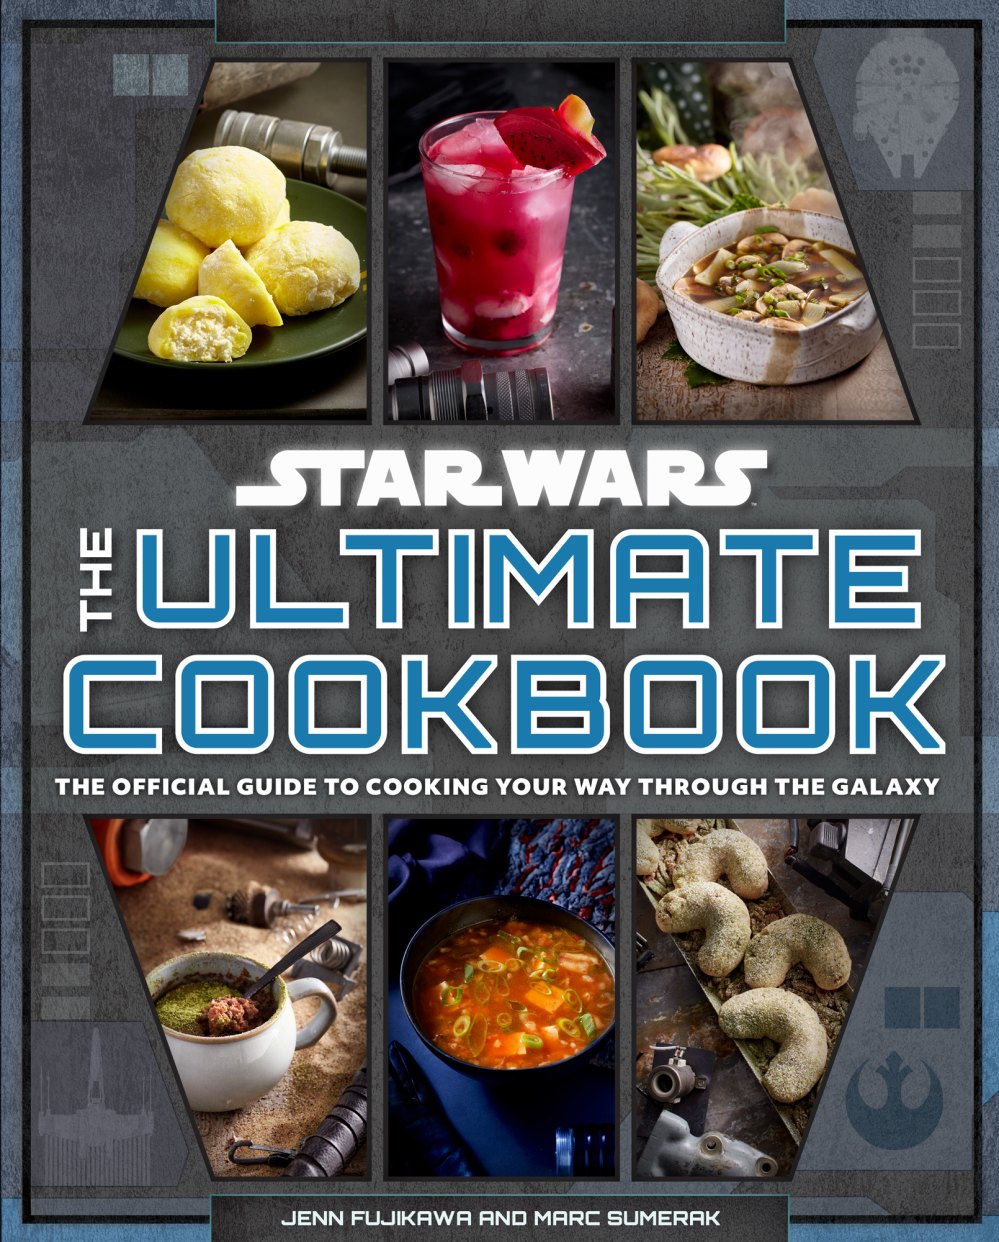 Star Wars Cookbook Recipe for Green Milk Cheesecake